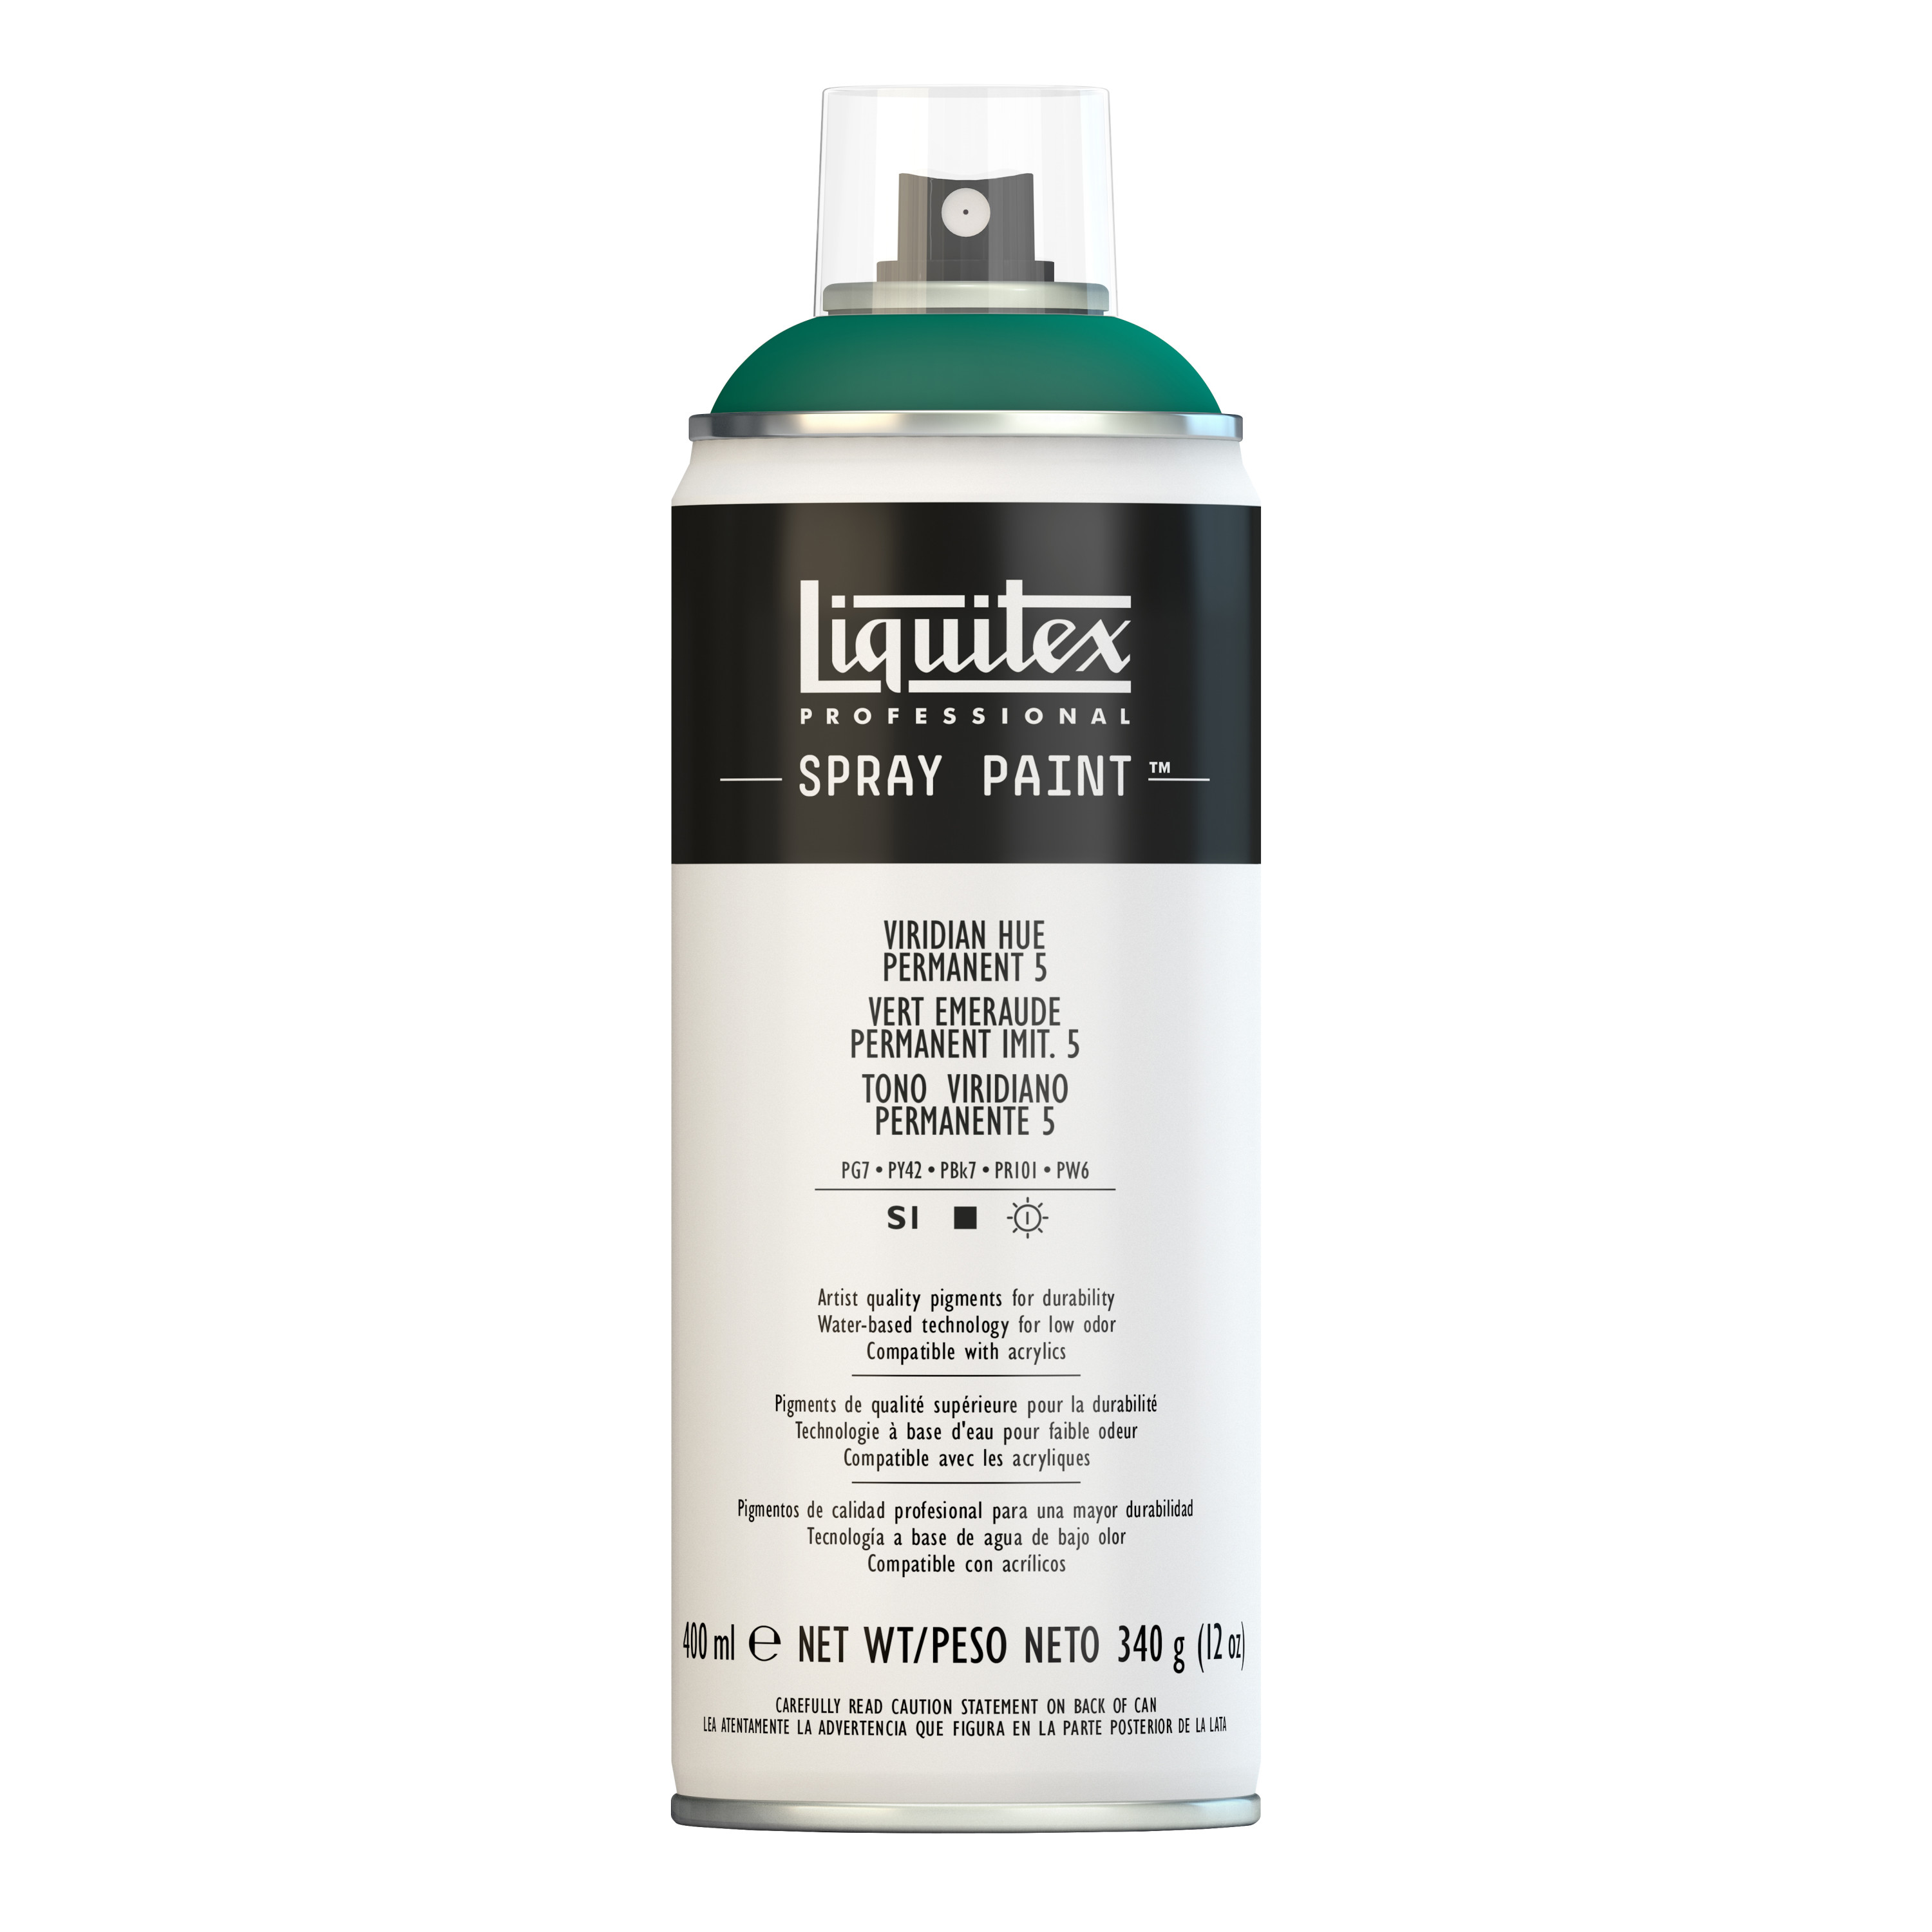 Liquitex Professional Spray Paint, 400ml, Viridian Hue Permanent 5 - image 1 of 1